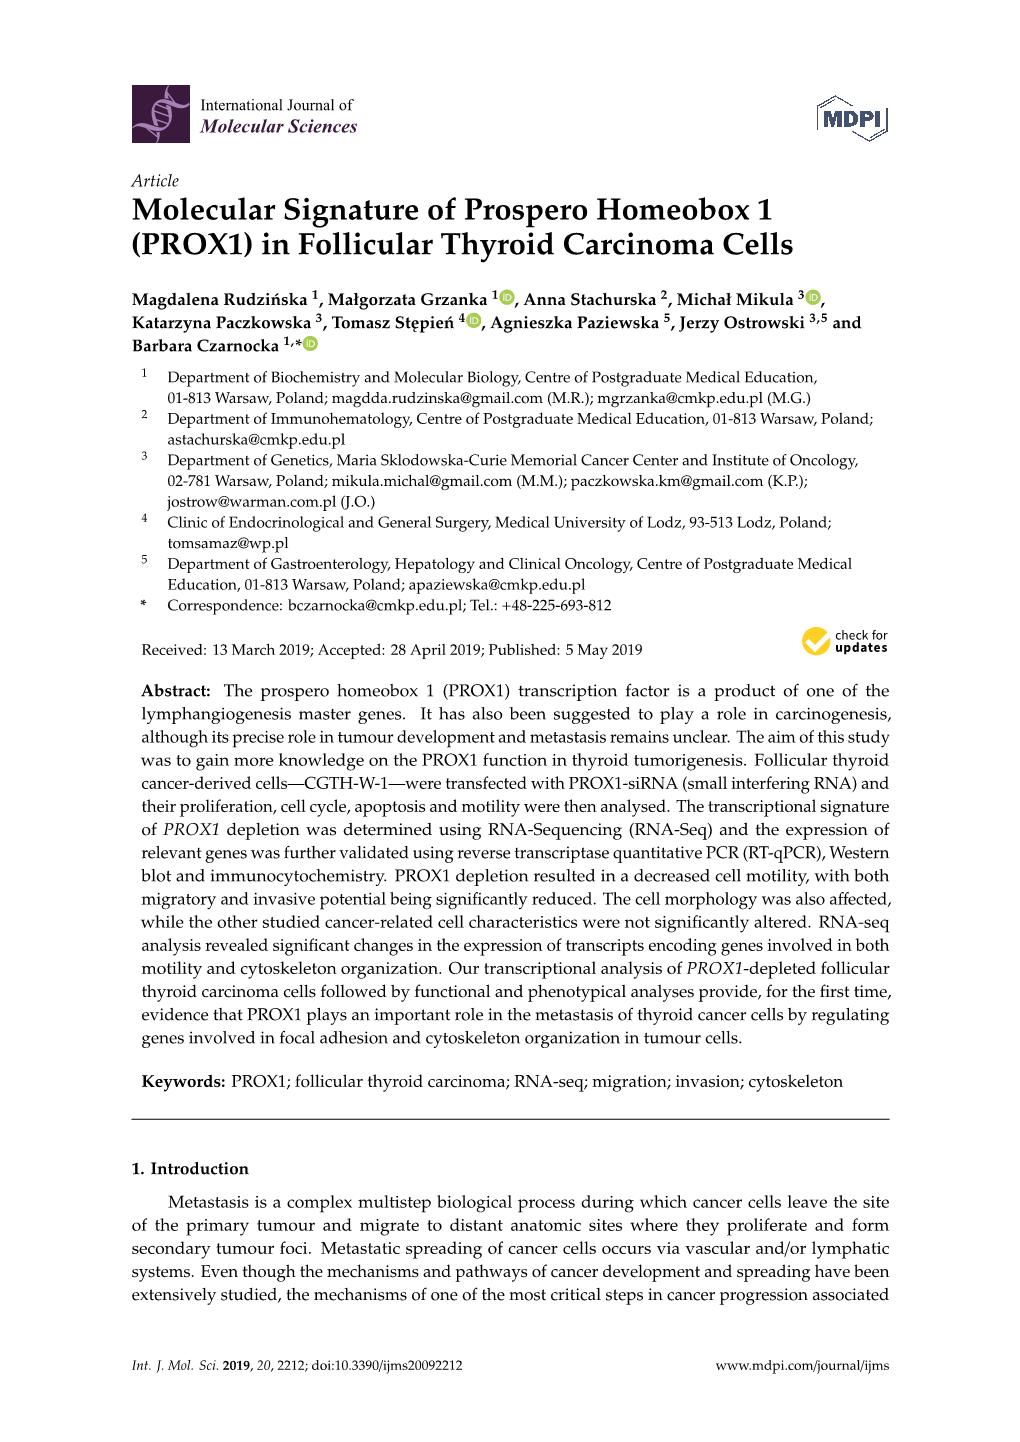 Molecular Signature of Prospero Homeobox 1 (PROX1) in Follicular Thyroid Carcinoma Cells